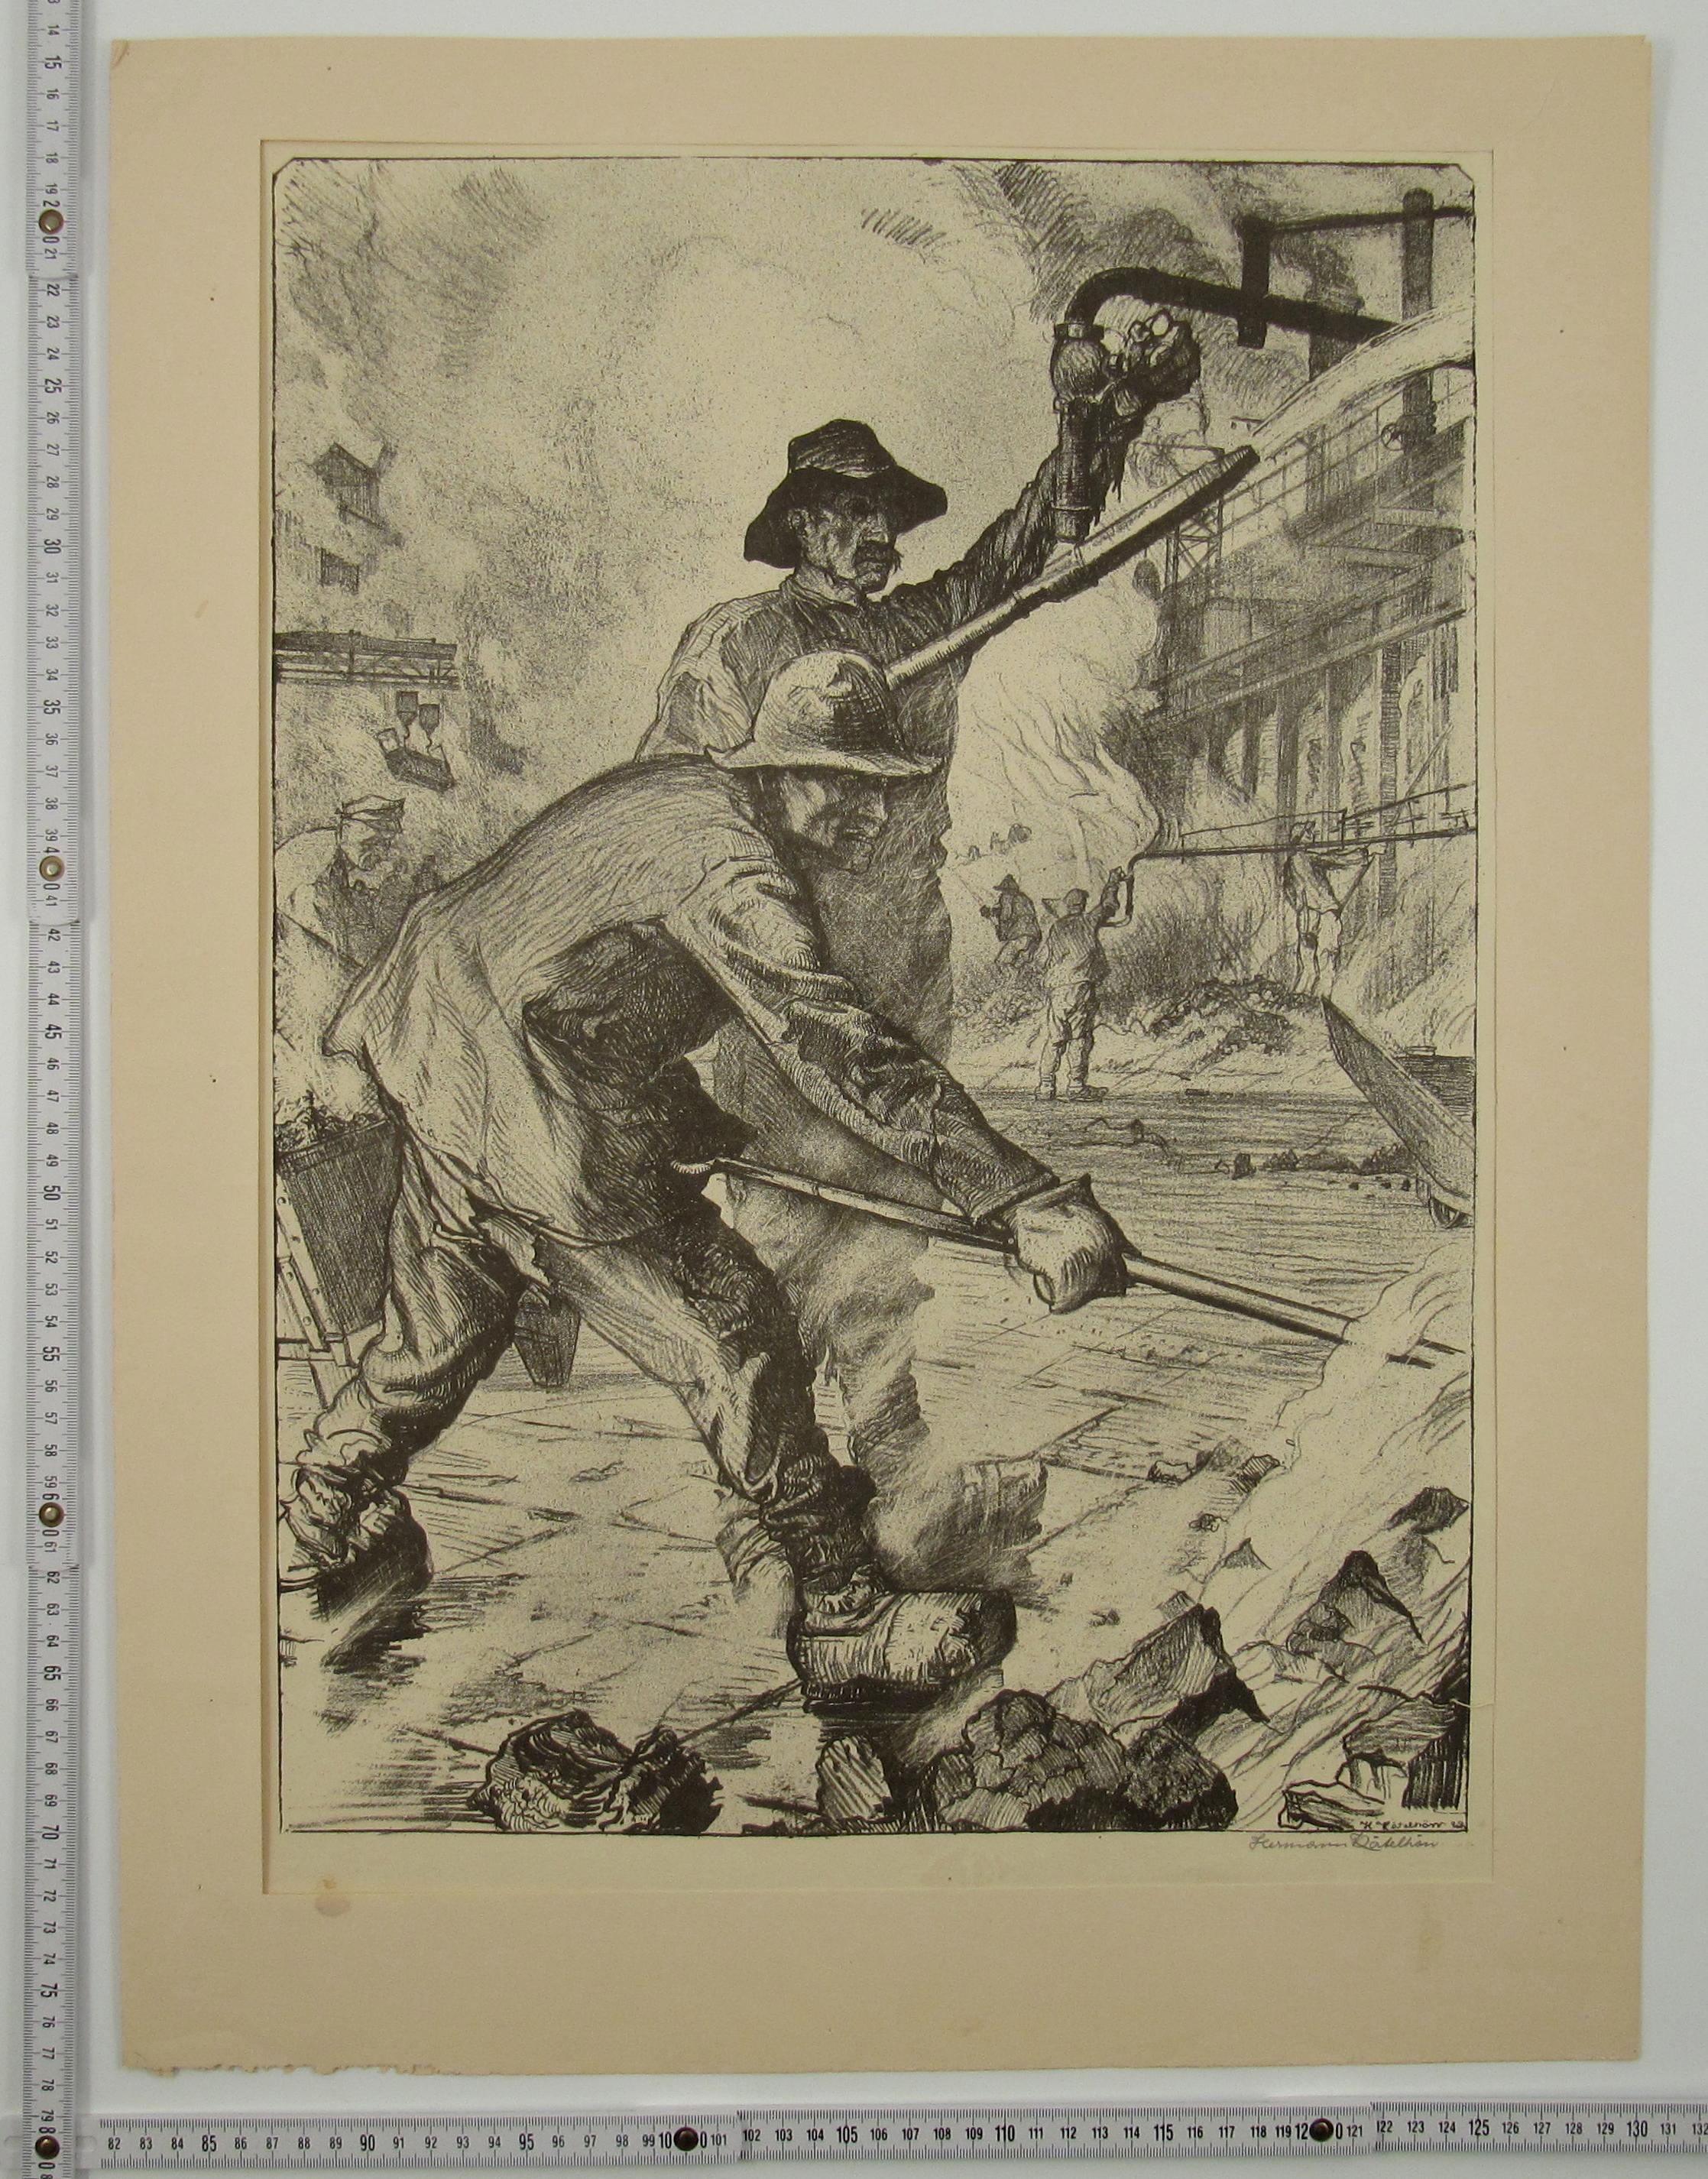 Workers - INDUSTRIAL ART - Pre War German School - Signed Lithograph - Naturalistic Print by Hermann Katelhön